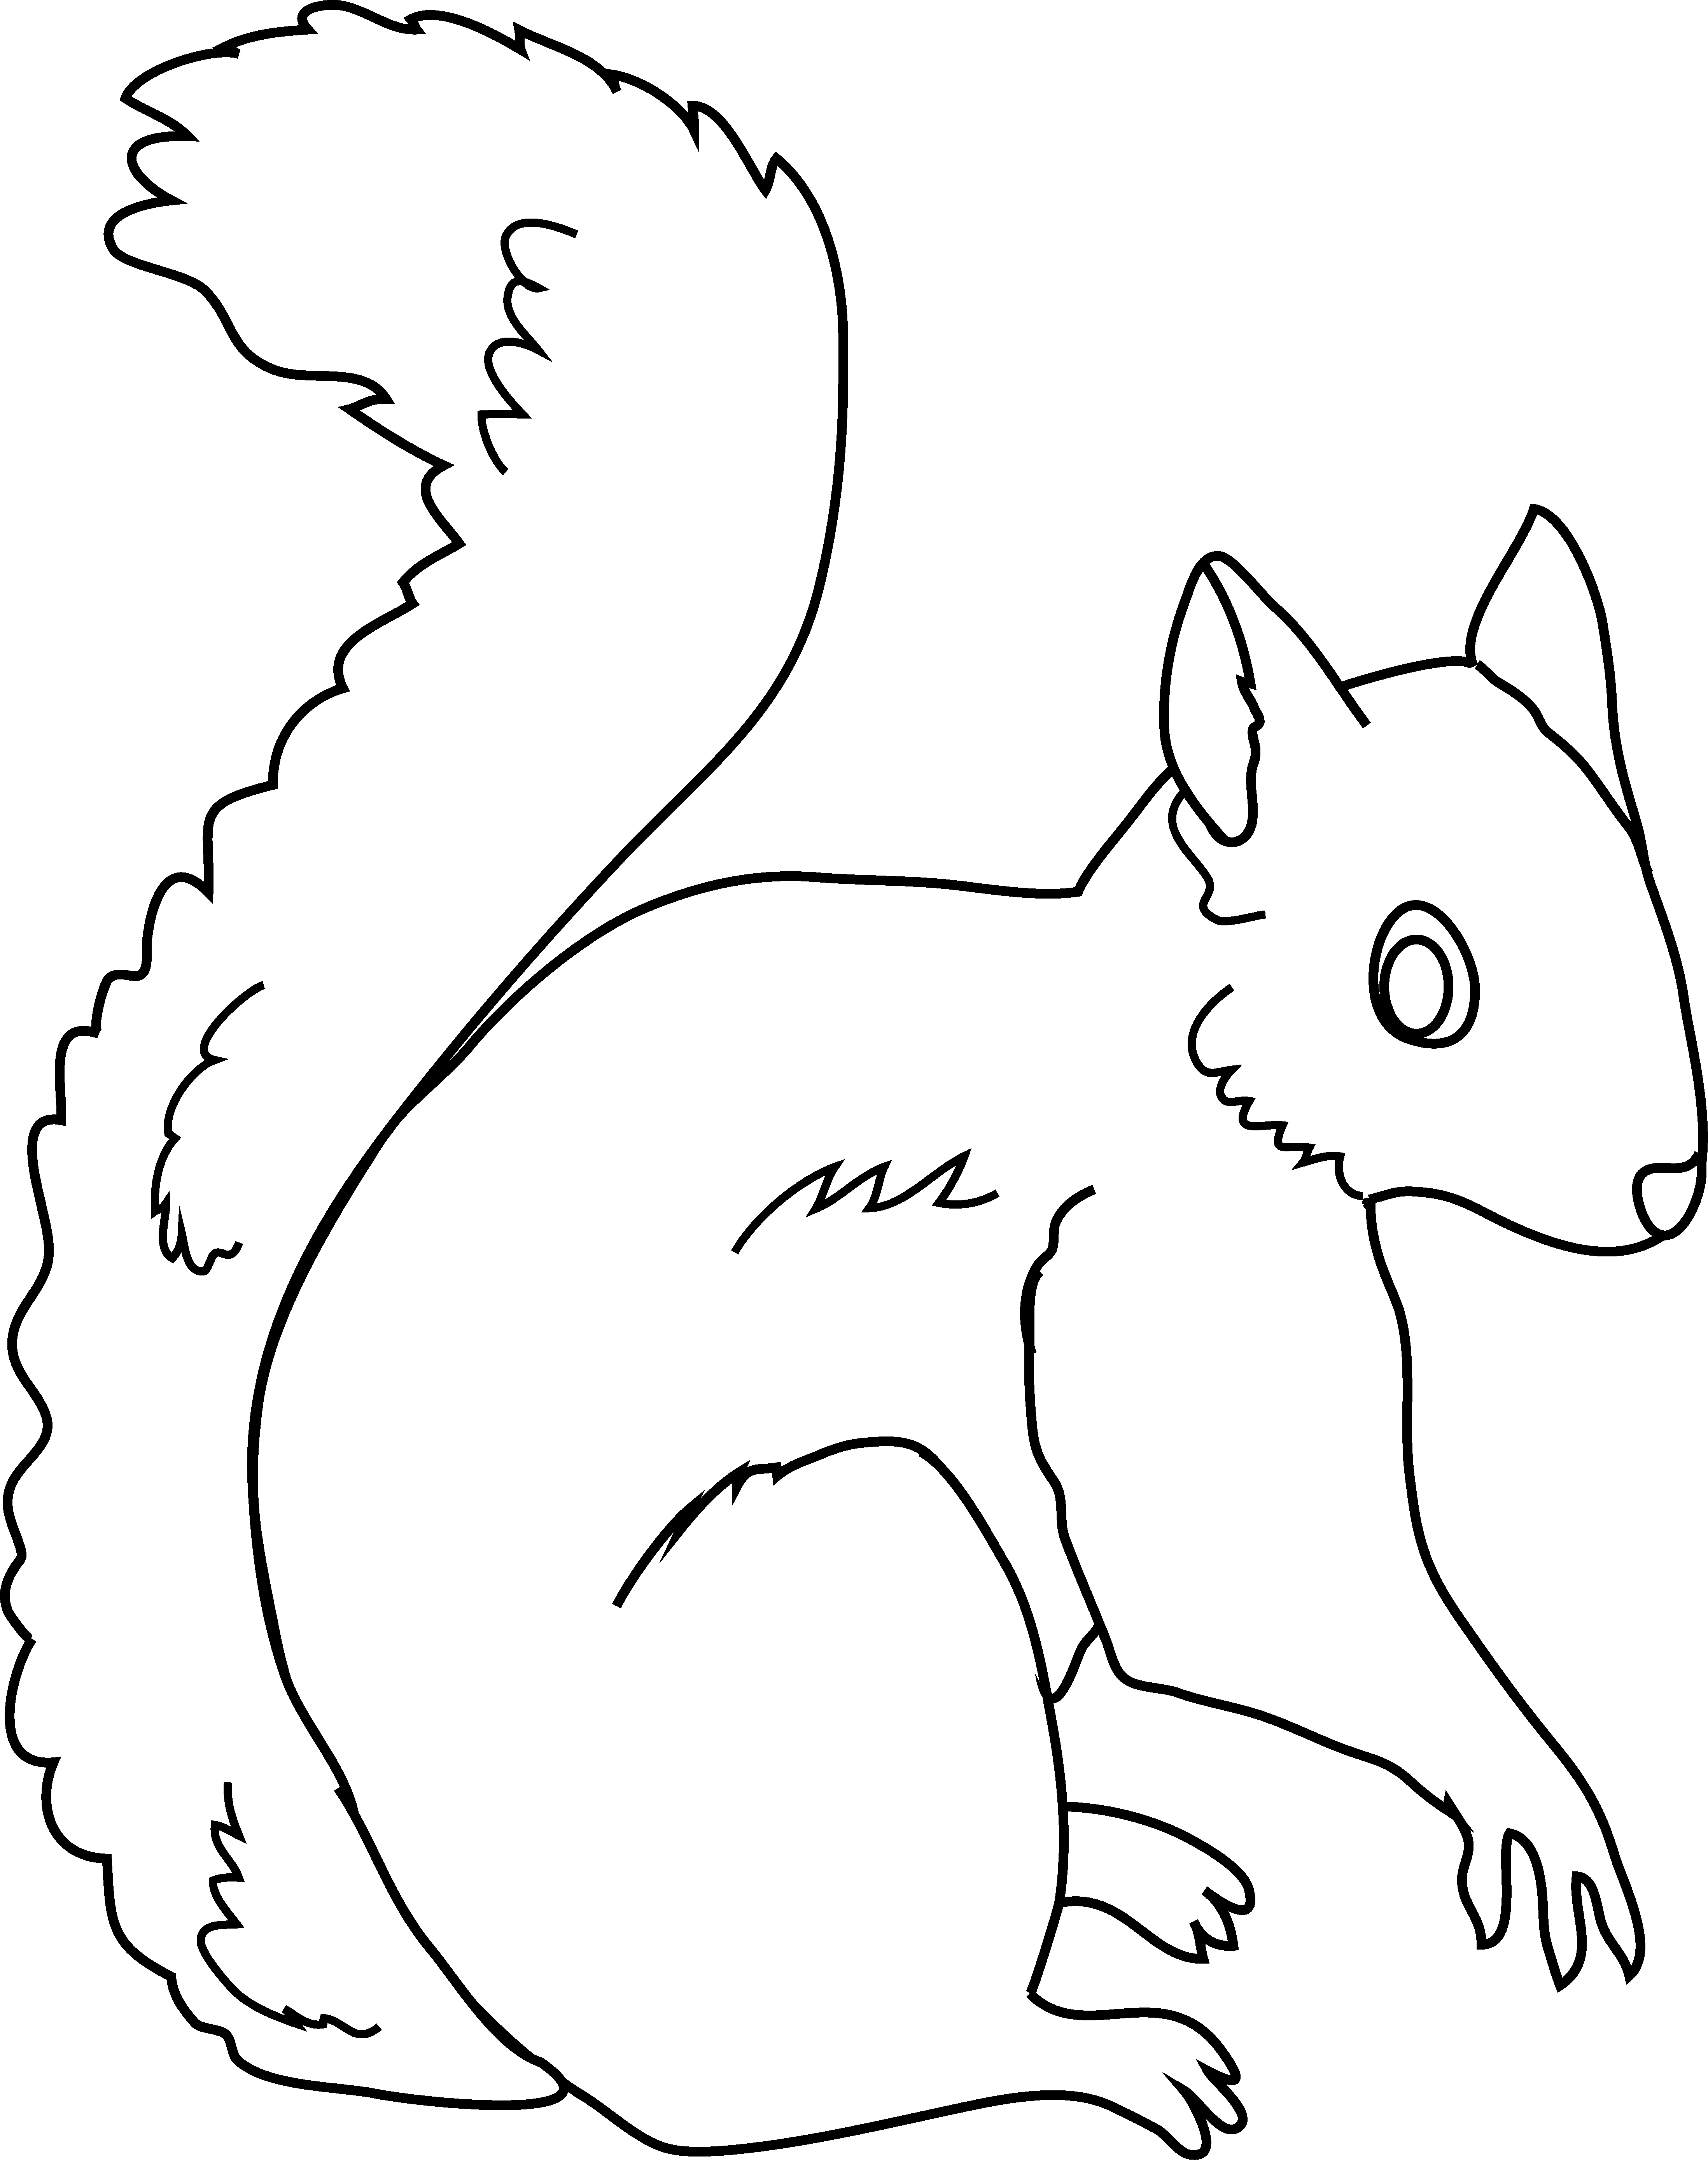 Squirrel Coloring Page - Free Clip Art